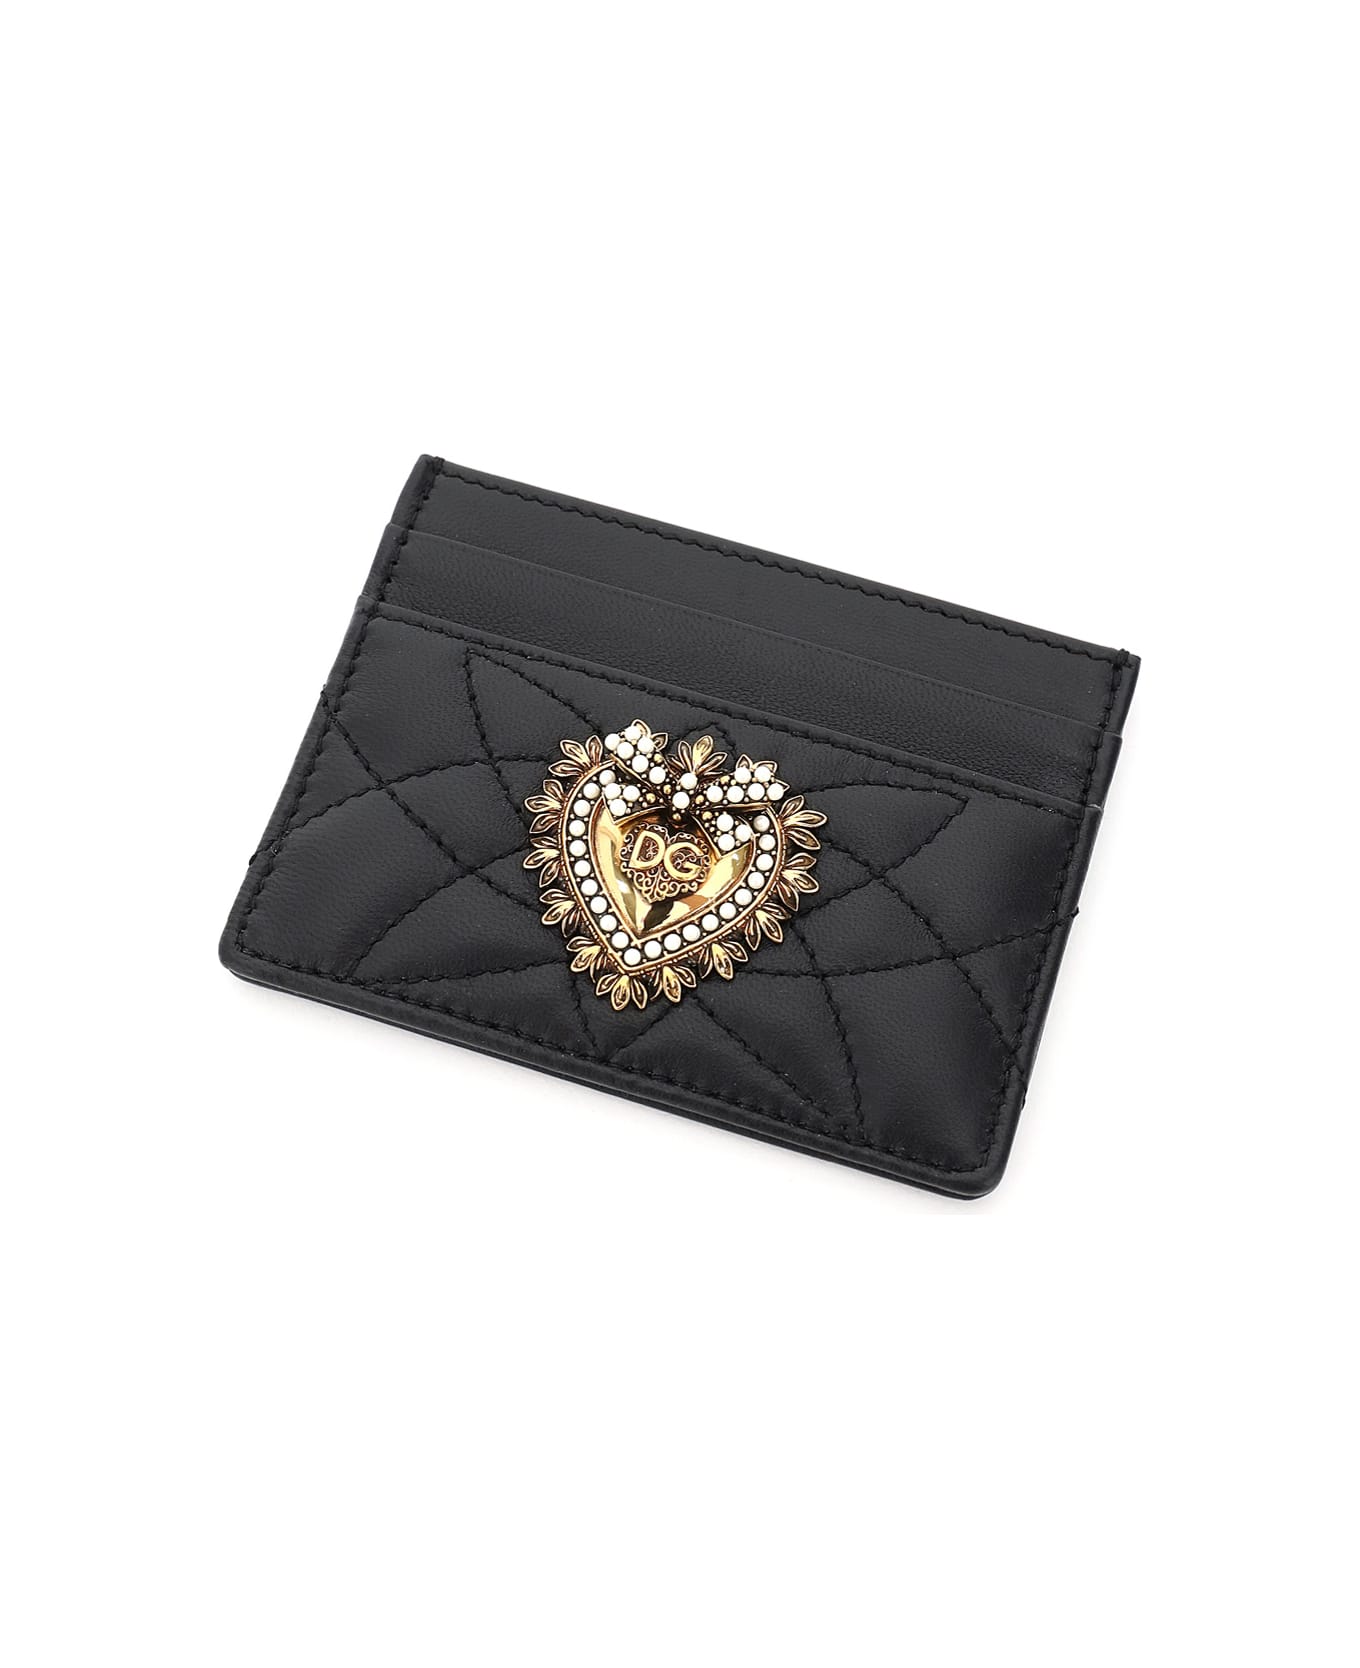 Dolce & Gabbana Devotion Cardholder - Black 財布